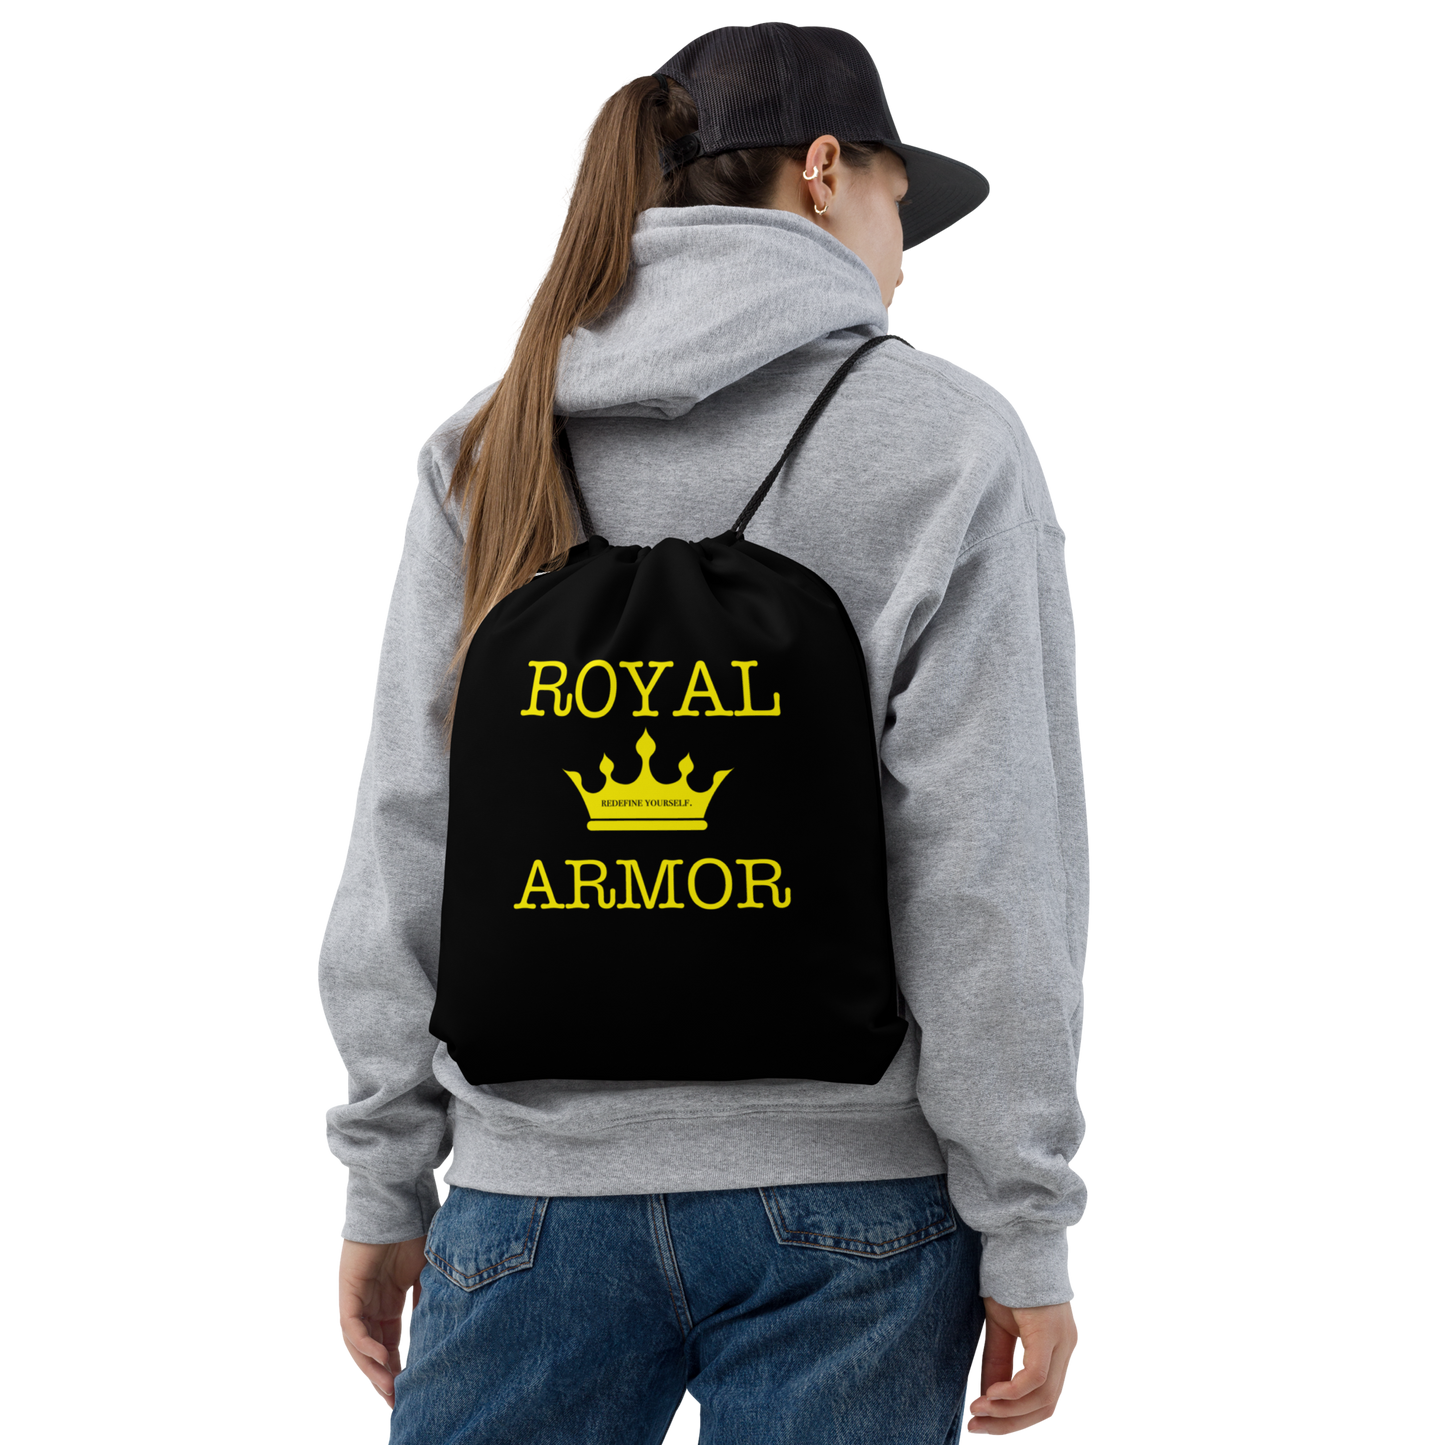 Royal Armor - Drawstring bag